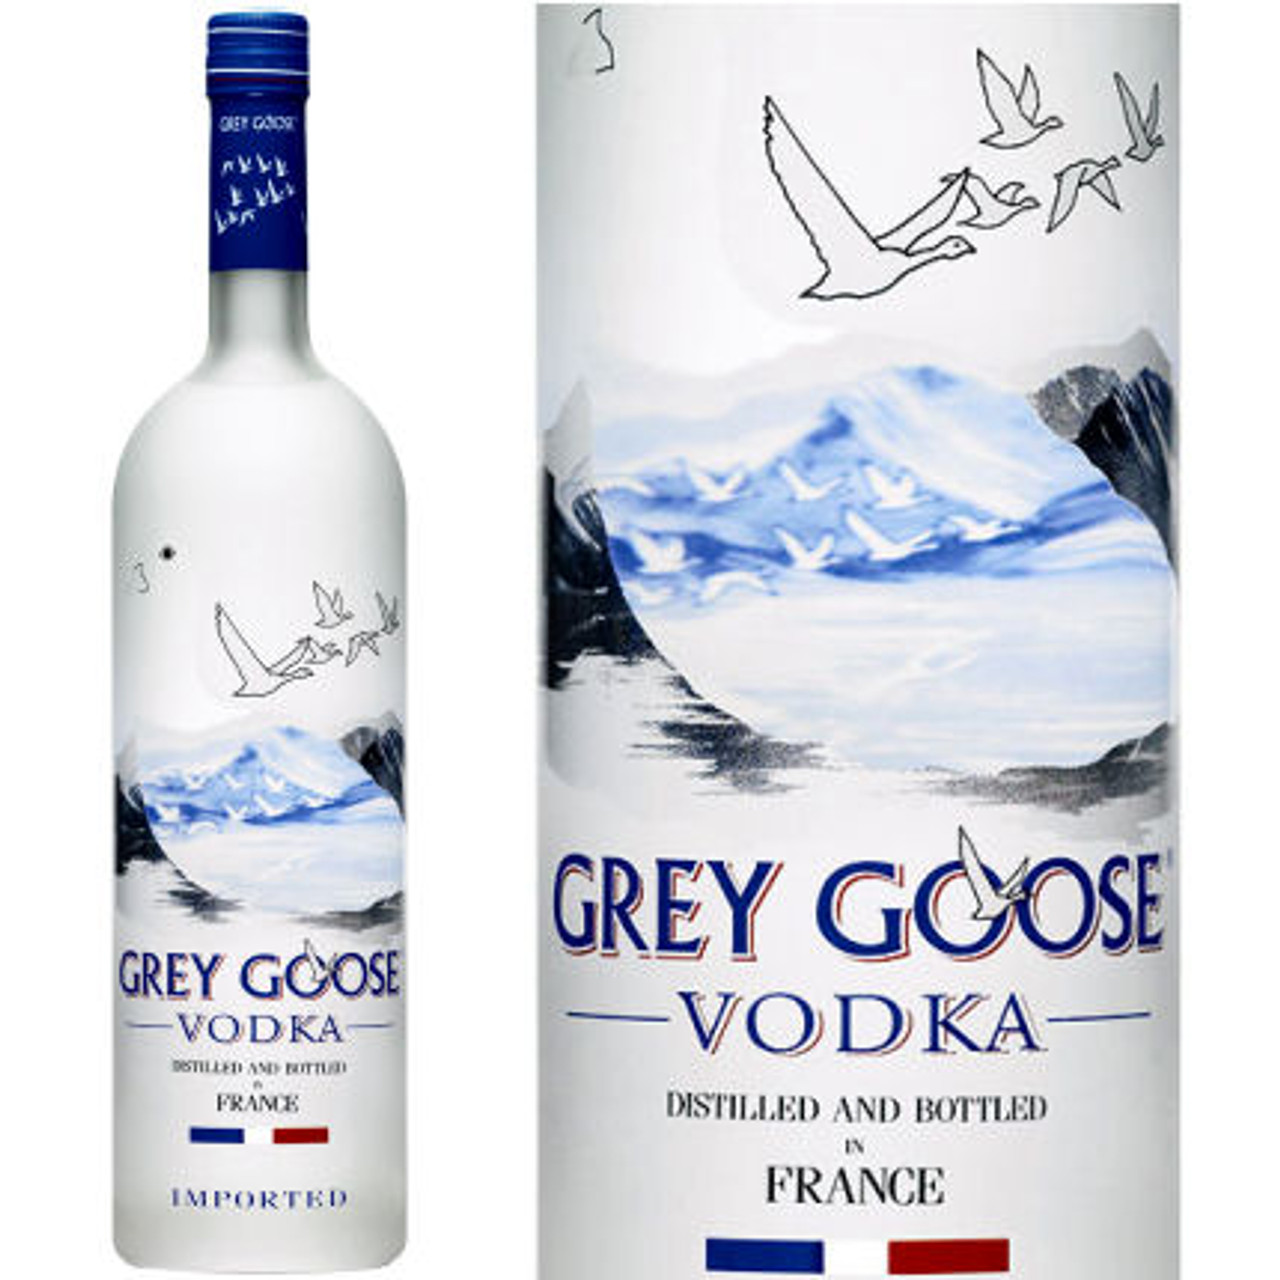 Grey Goose 375ml